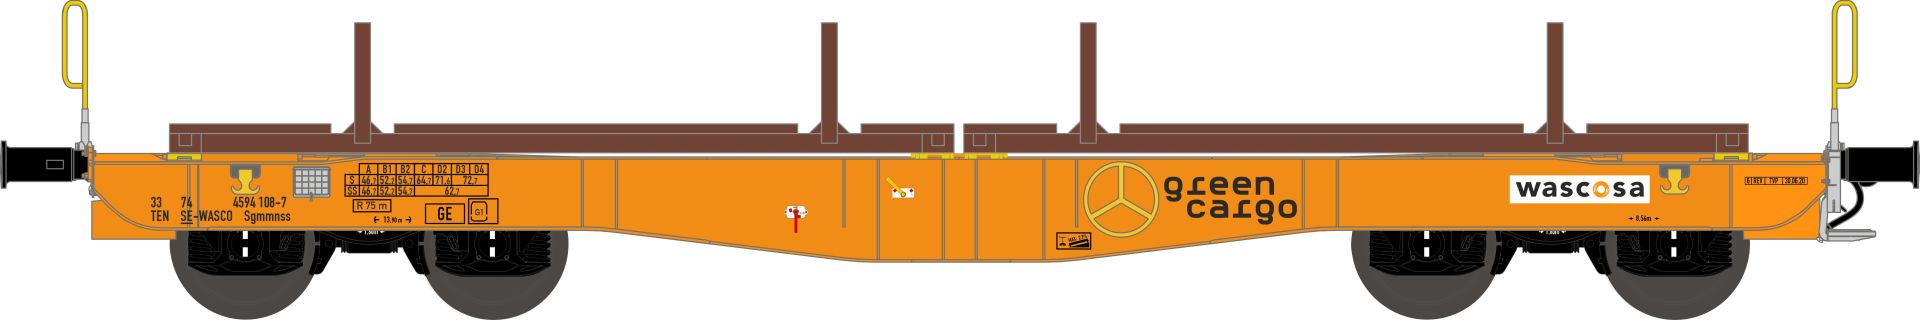 nme 560600 - Containertragwagen 41', WASCOSA - GREEN CARGO, Ep.VI